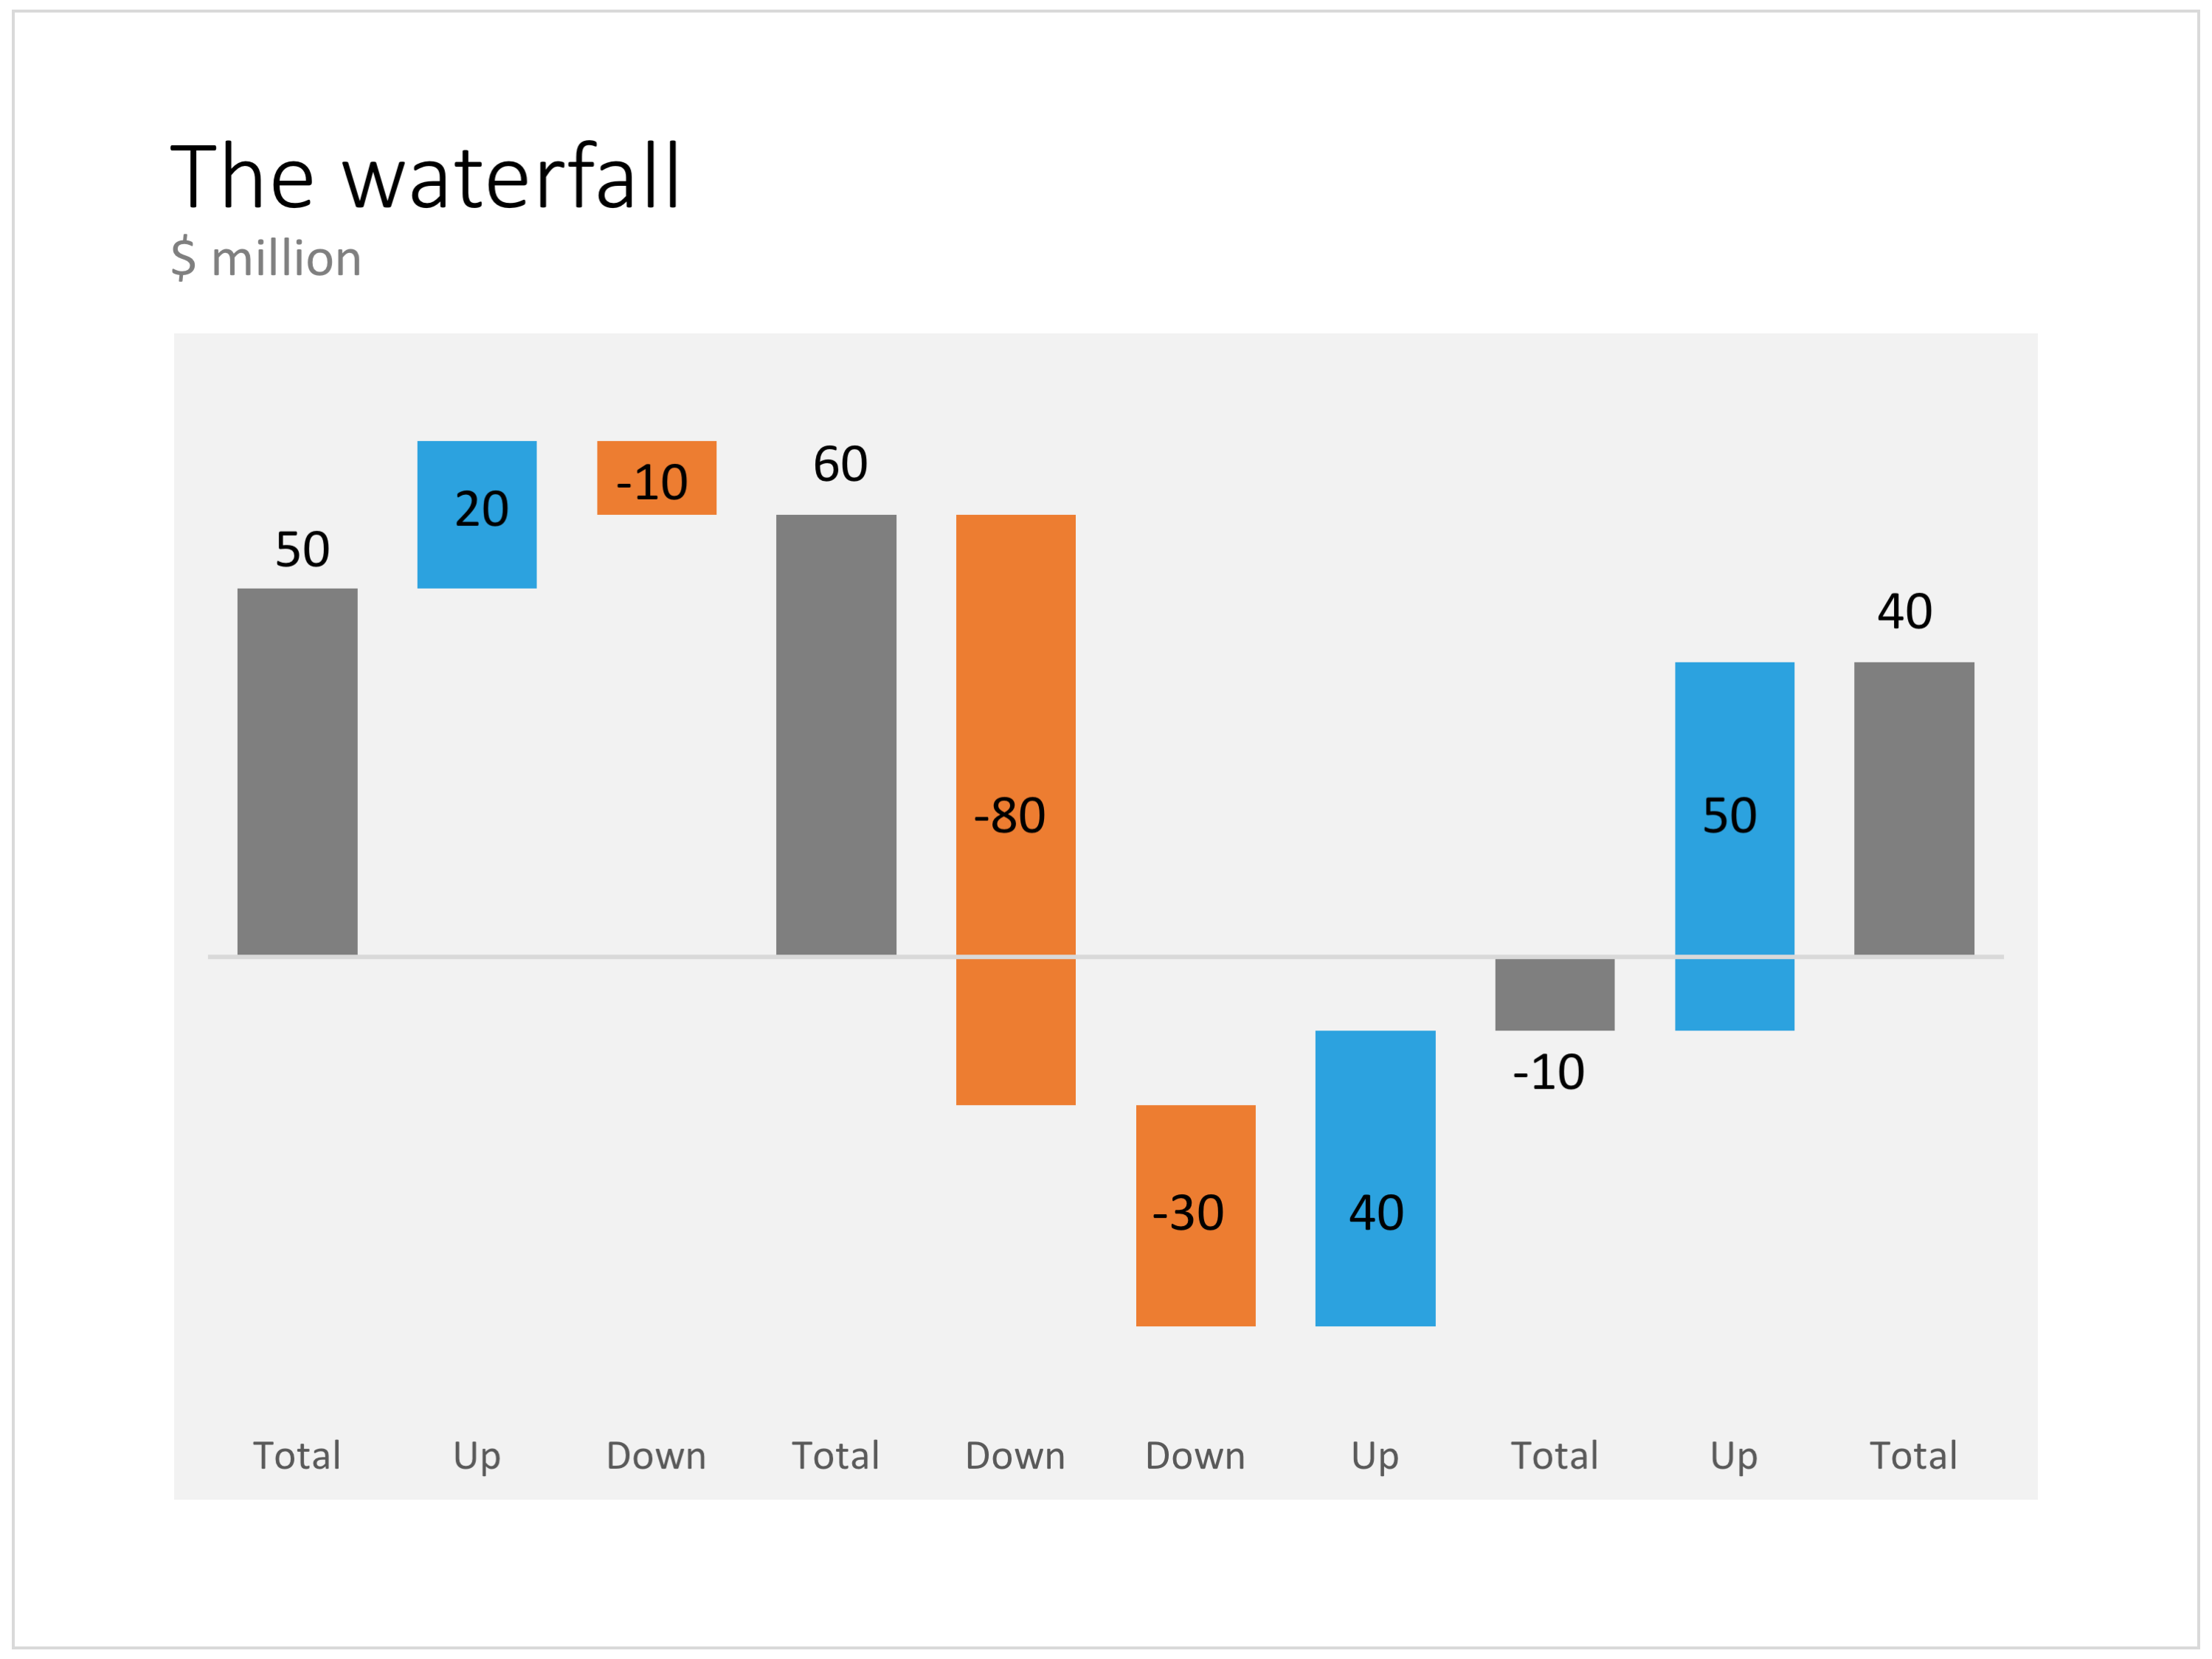 Waterfall Chart Template Powerpoint